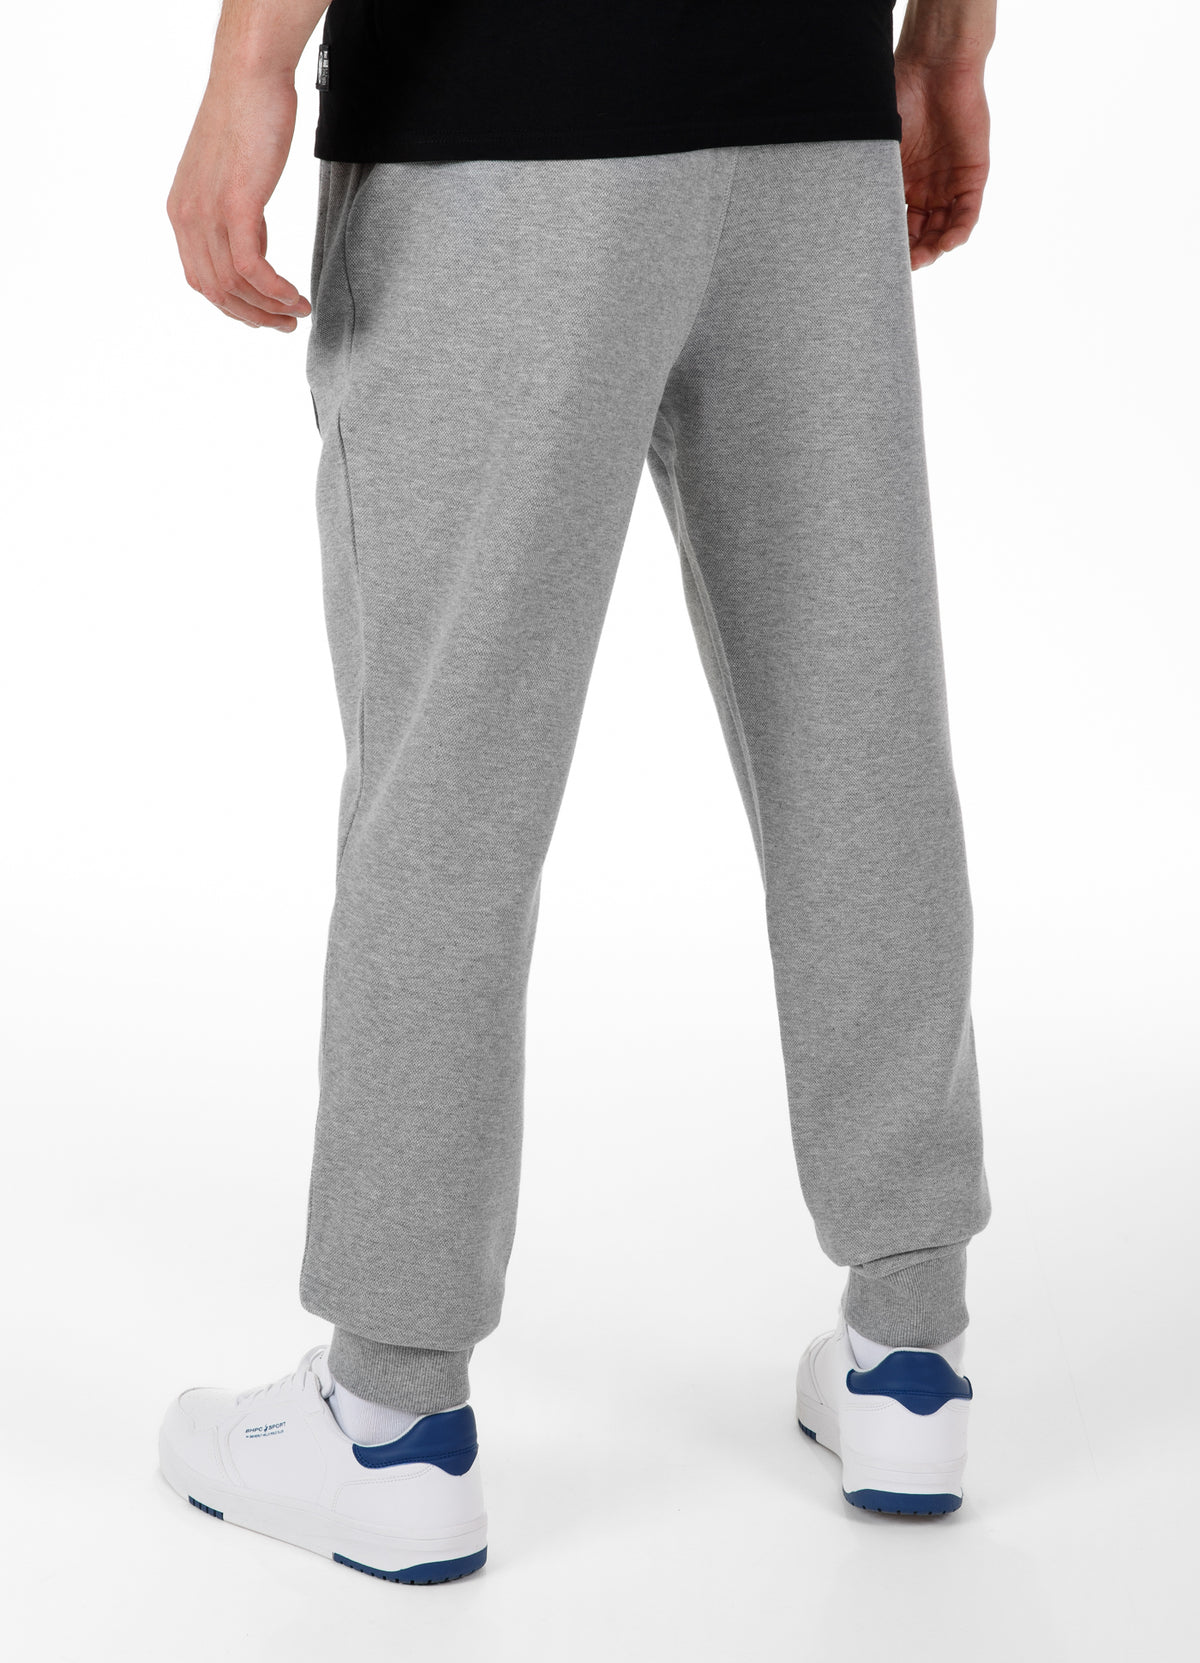 NEW LOGO Premium Pique Grey Track Pants - Pitbullstore.eu